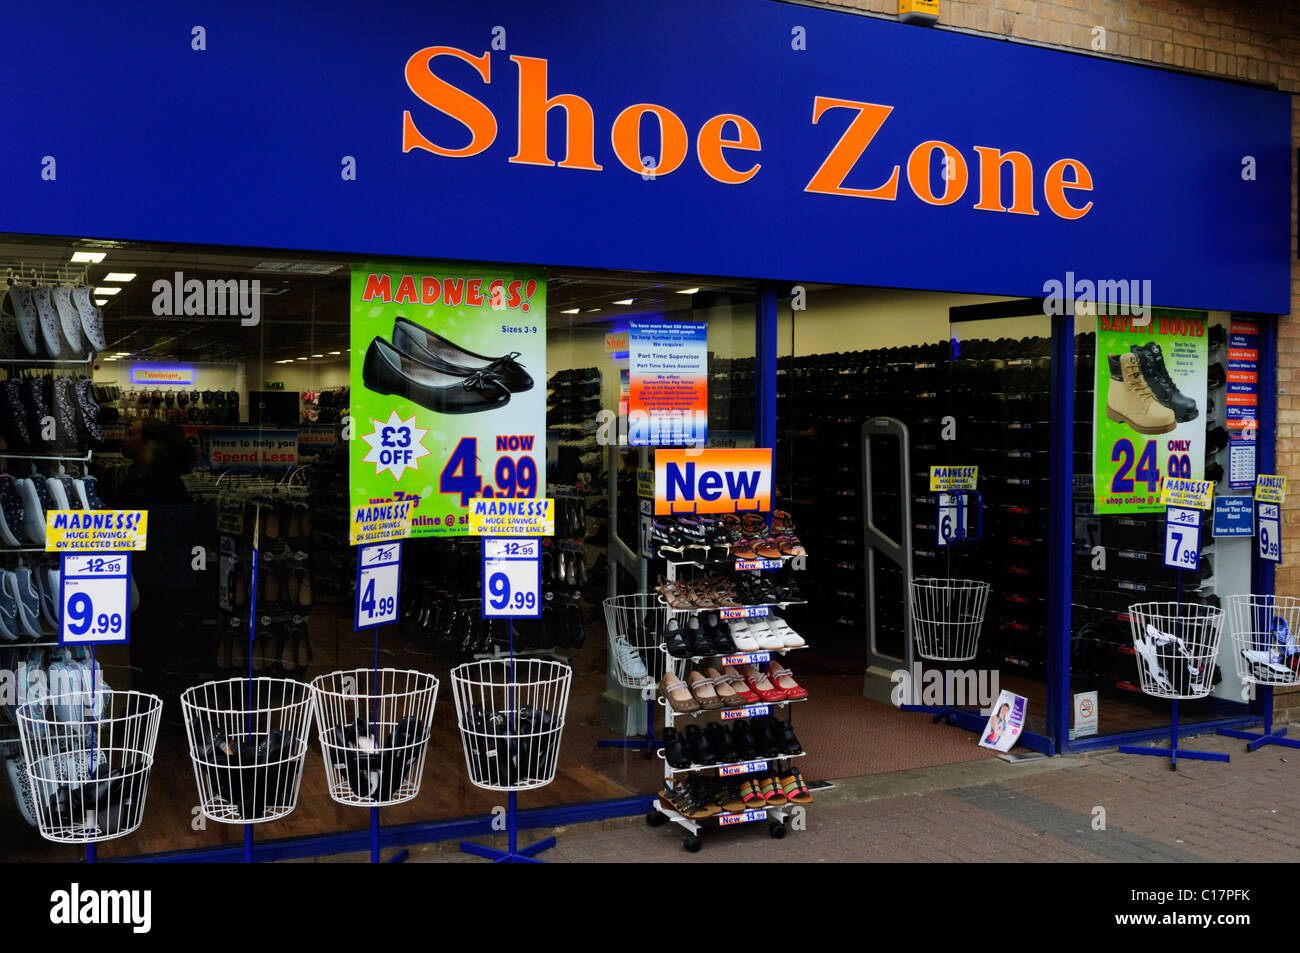 cheap shoe websites uk